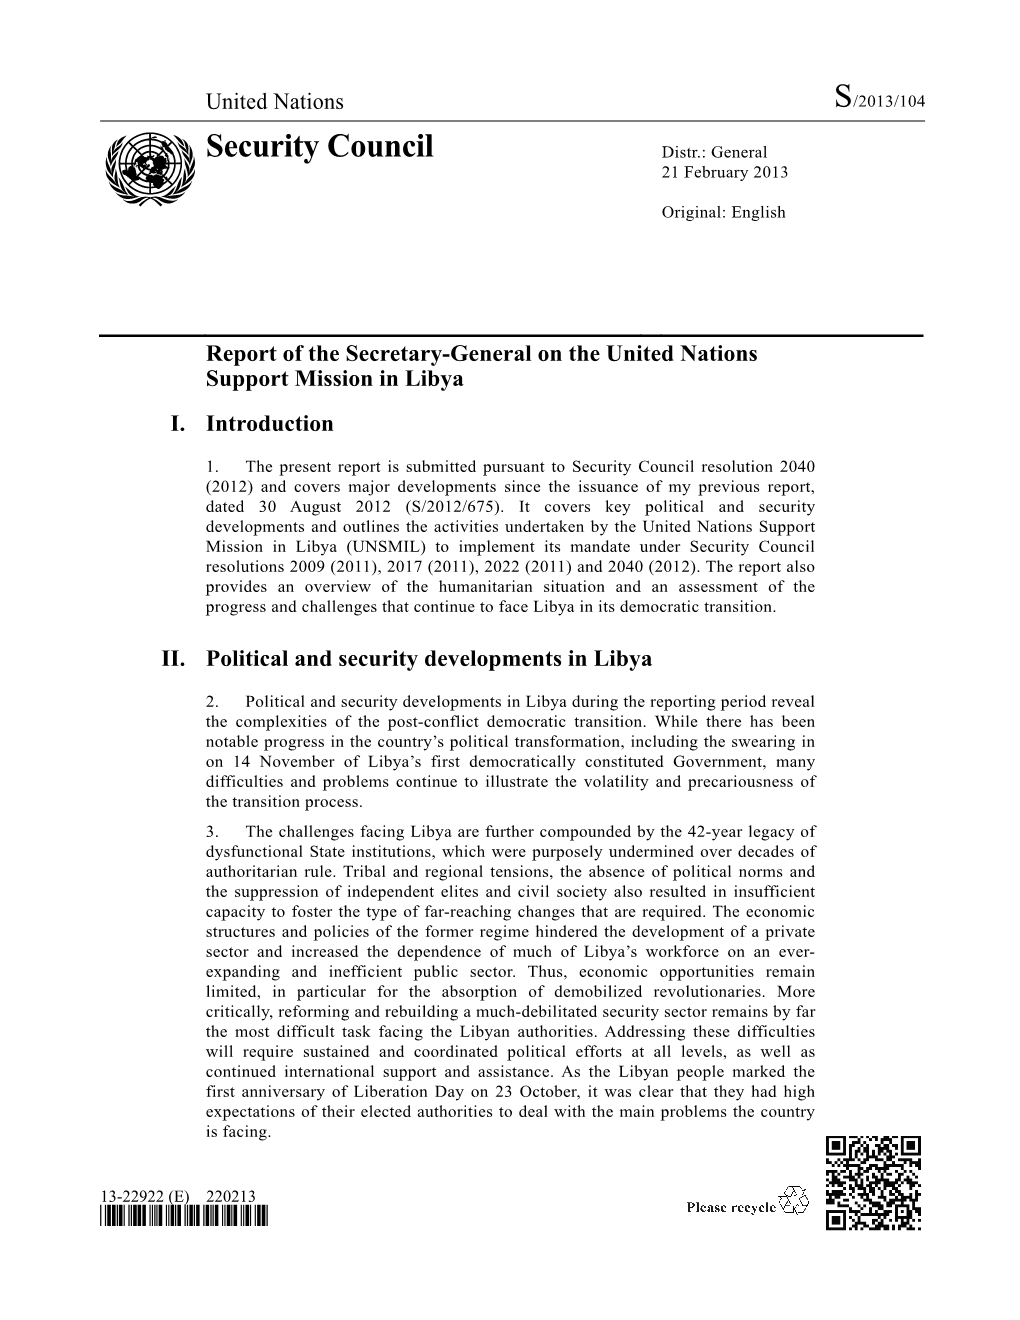 Report of the Secretary-General Ban Ki-Moon on the United